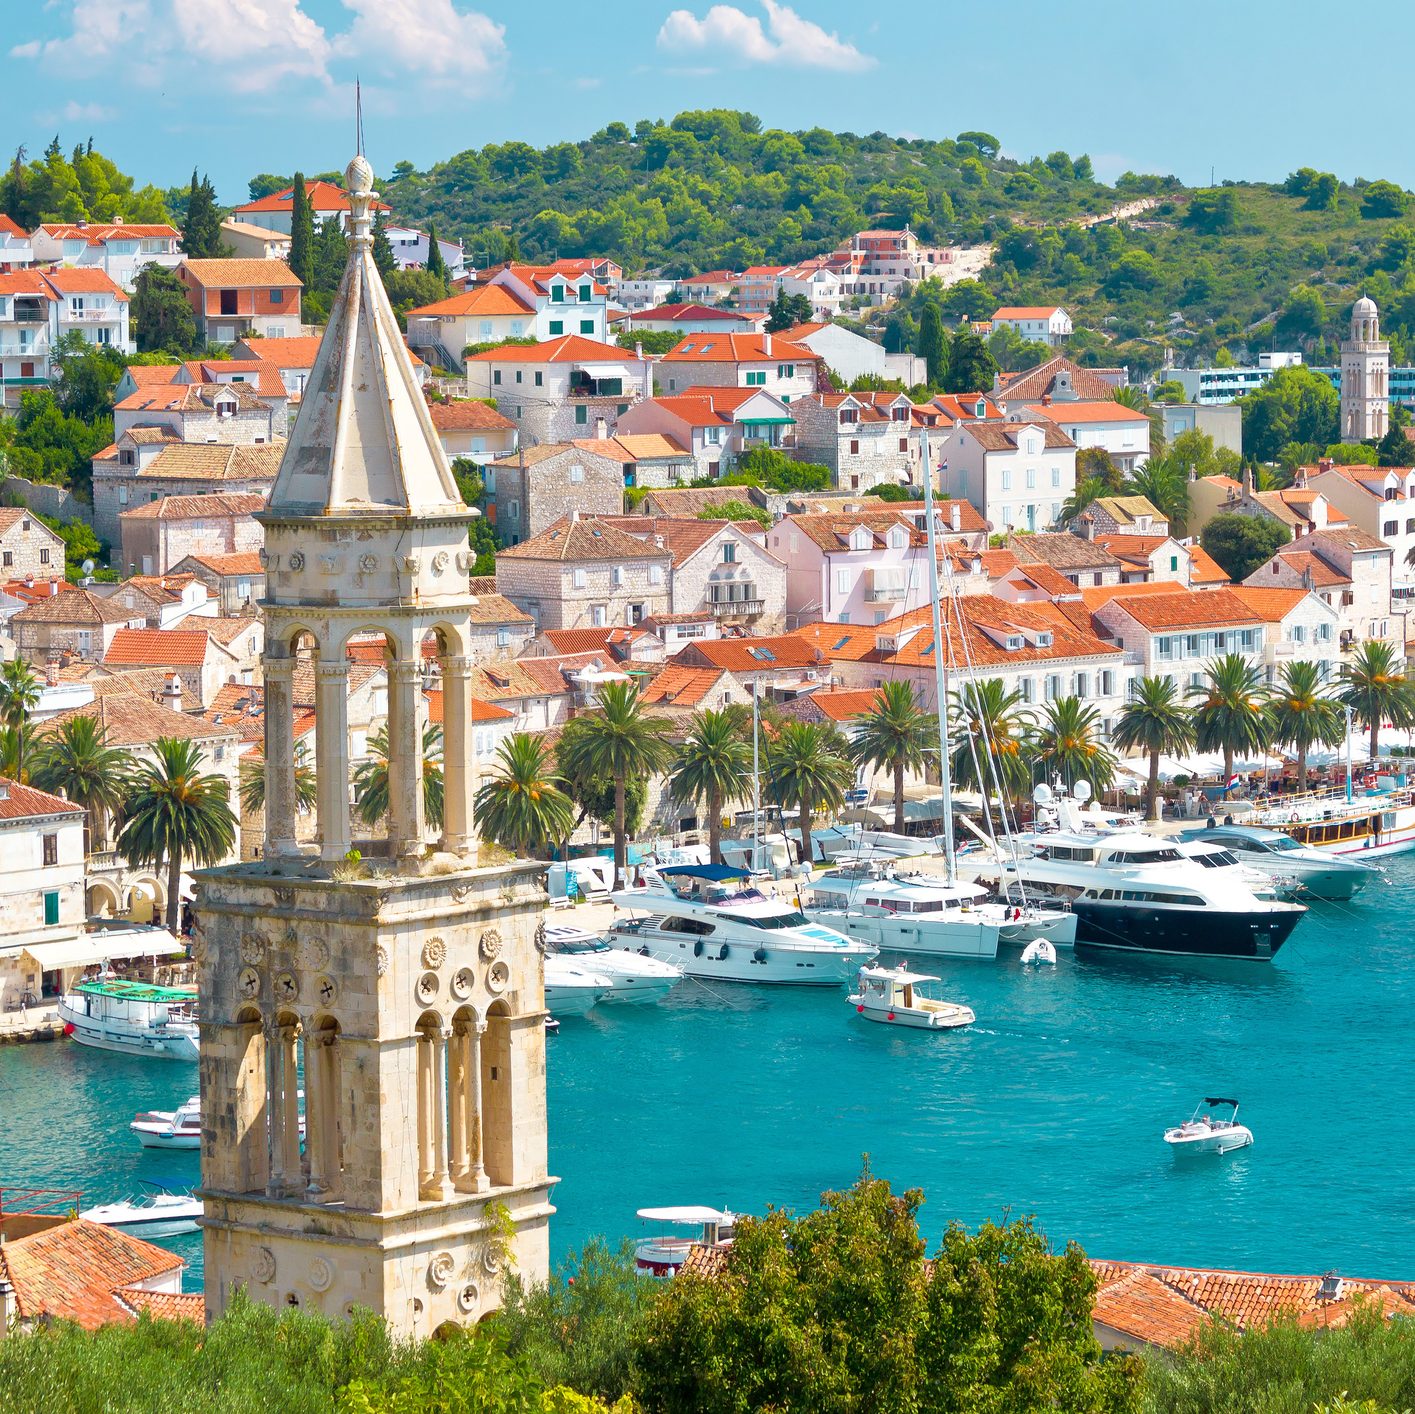 A hilltop view on the Croatian island of Hvar overlooks the Adriatic Sea